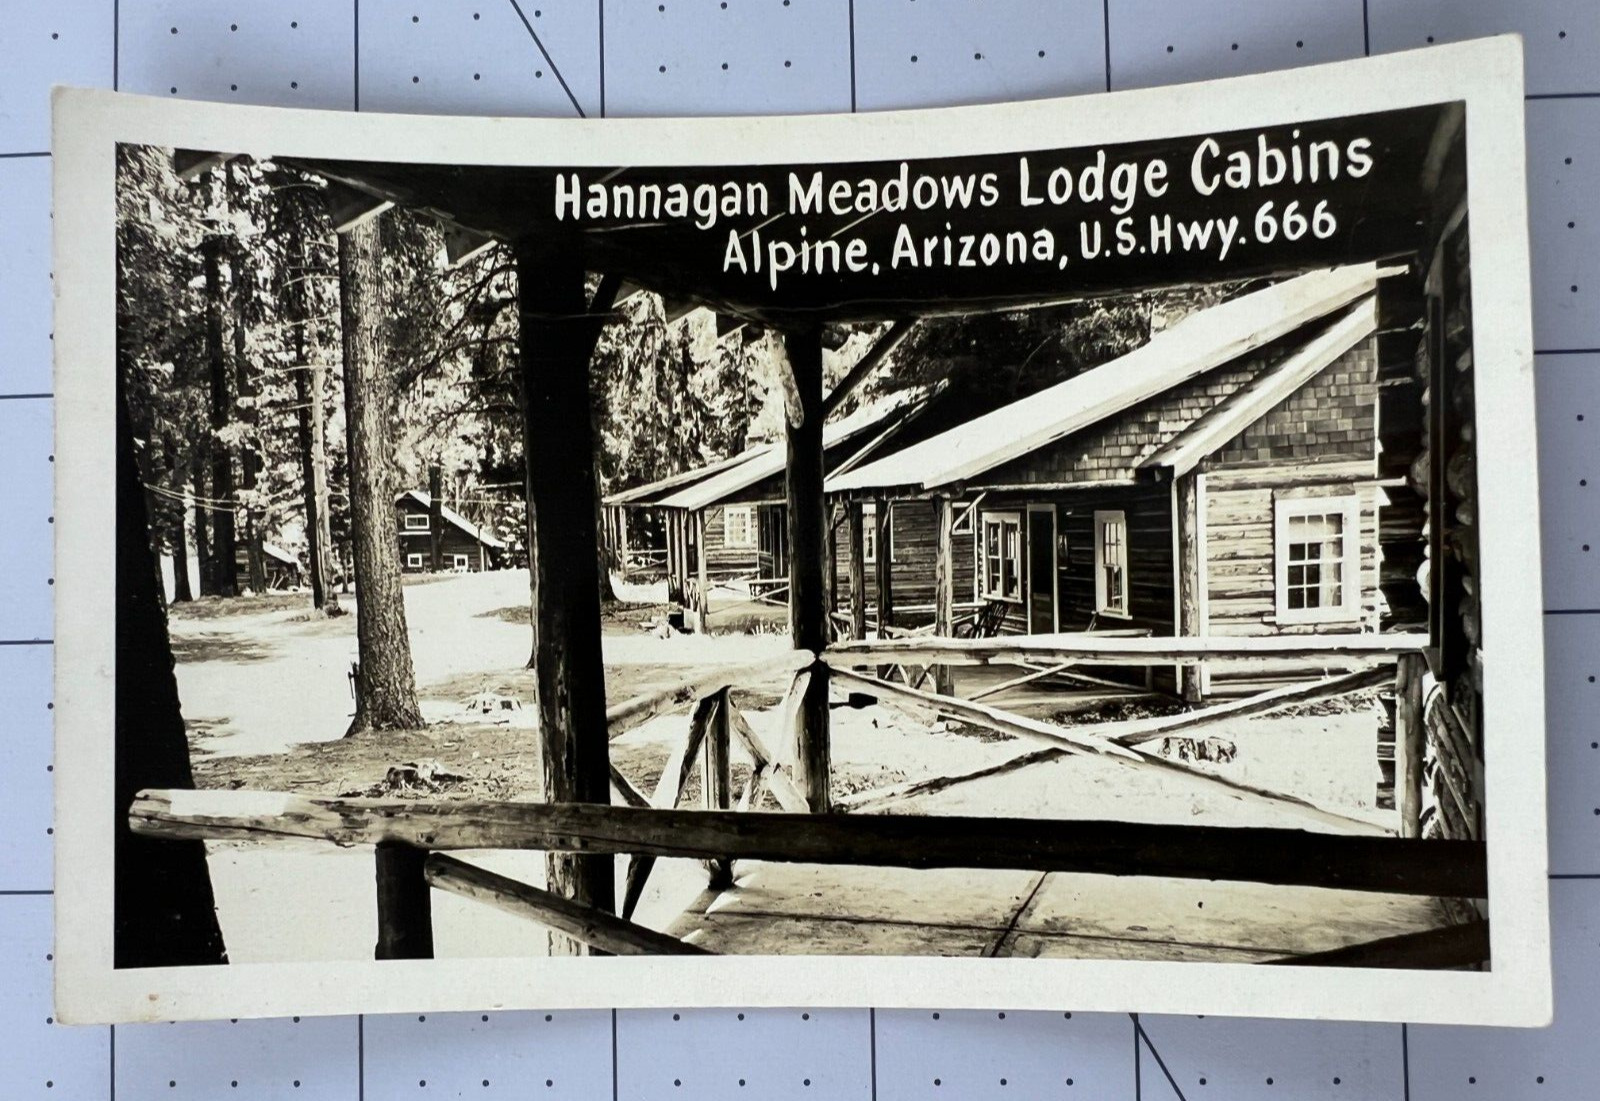 Hannagan Meadow Lodge Cabins, Alpine Arizona Highway 666 RPPC Vintage Postcard